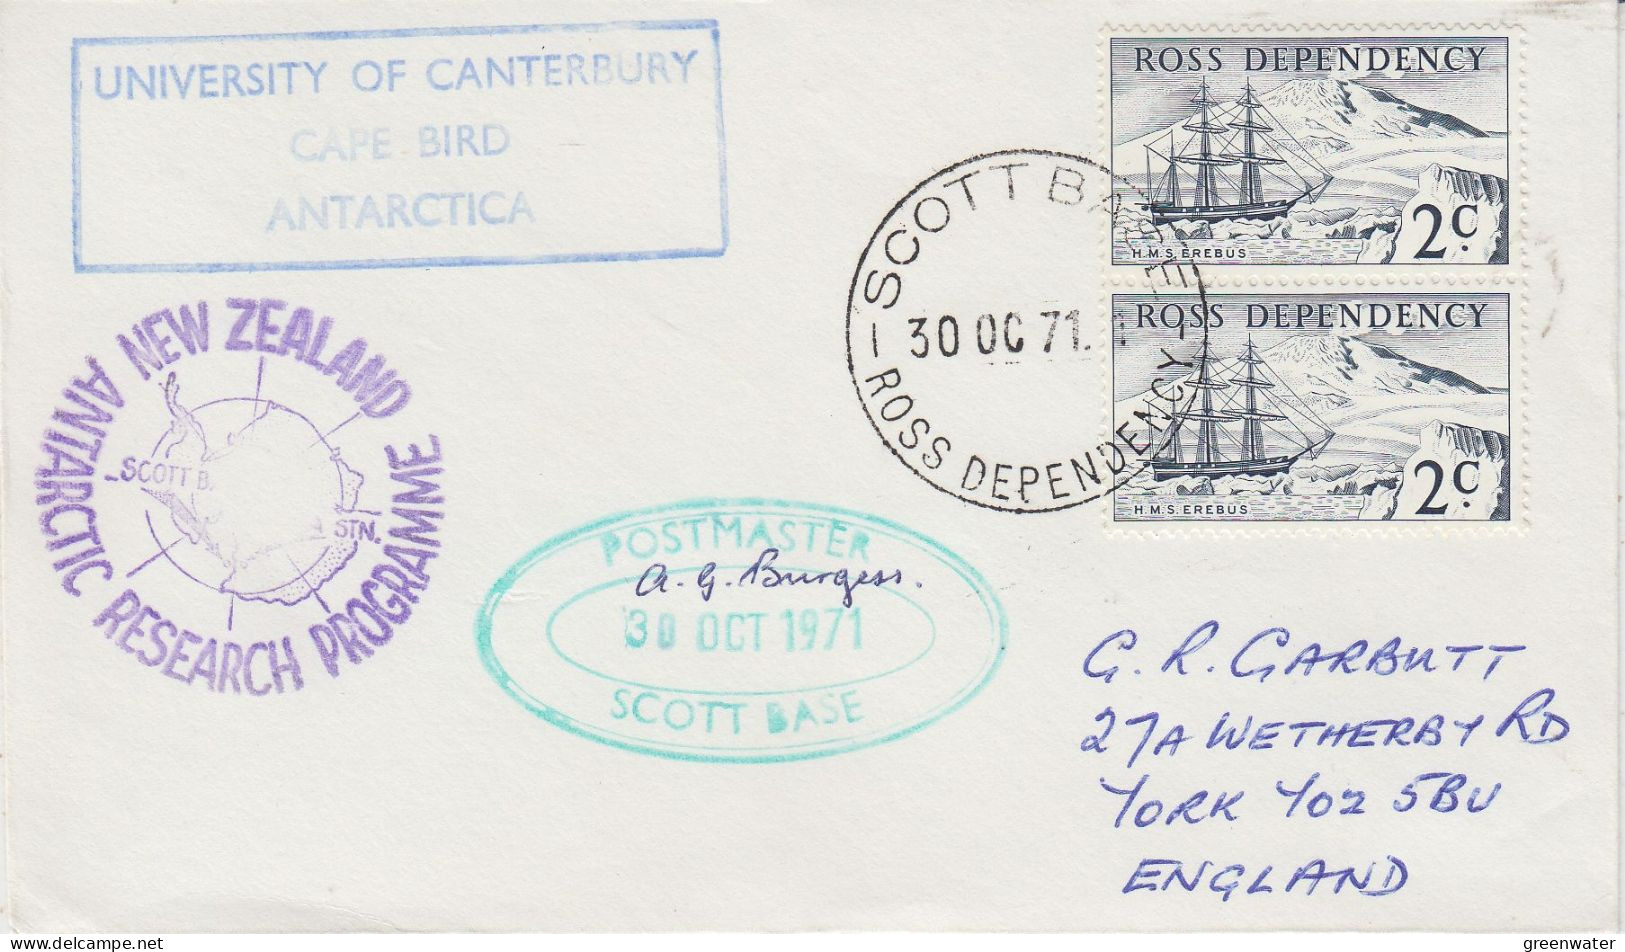 Ross Dependency University Of Canterbury Cape Bird  Signature Postmaster Scott Base  Ca Scott Base 30 OCT 1971 (SO192) - Onderzoeksstations